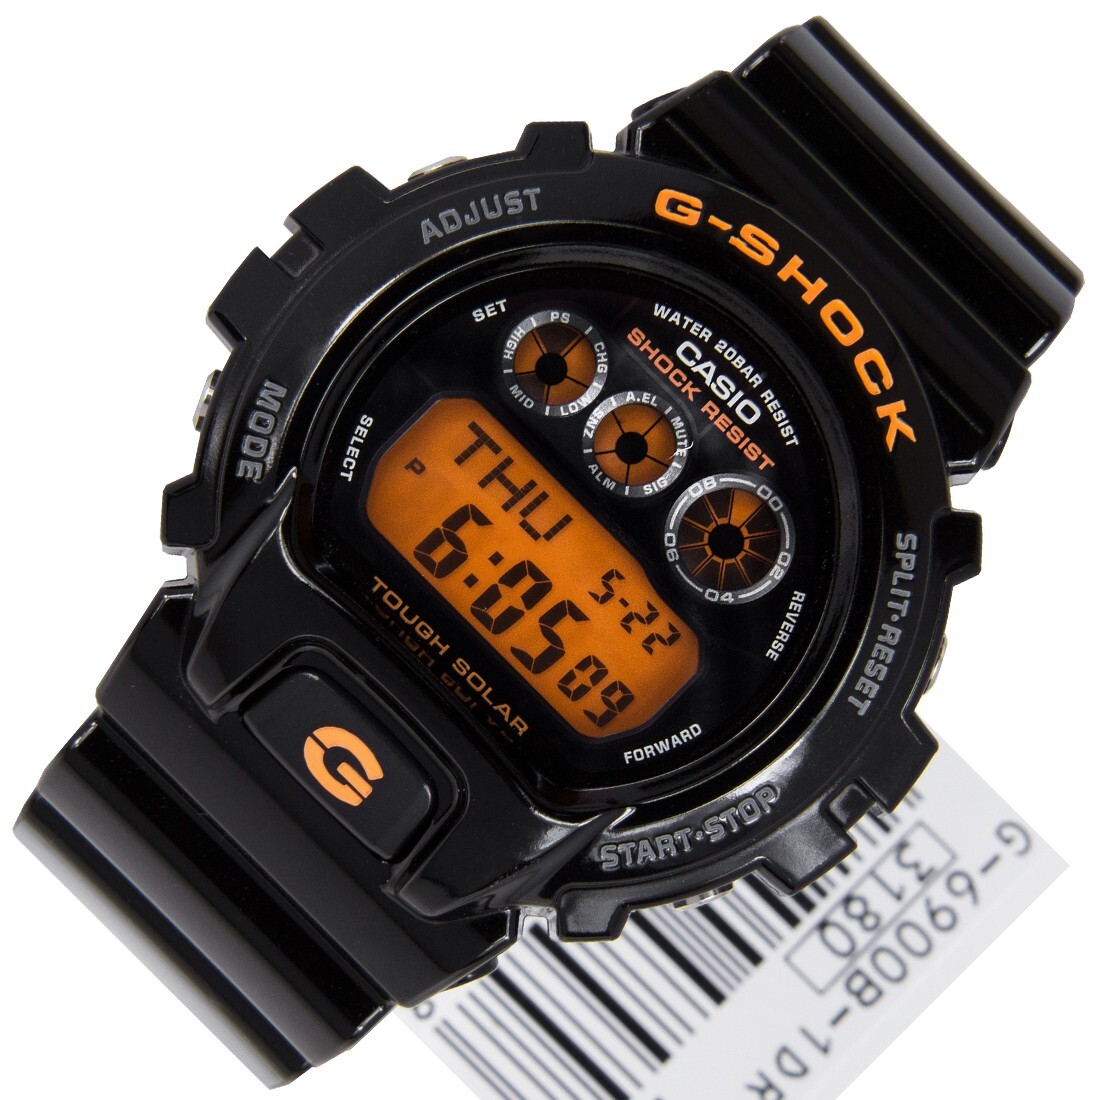 Đồng hồ nam Casio G-Shock Solar G-6900B-1DR